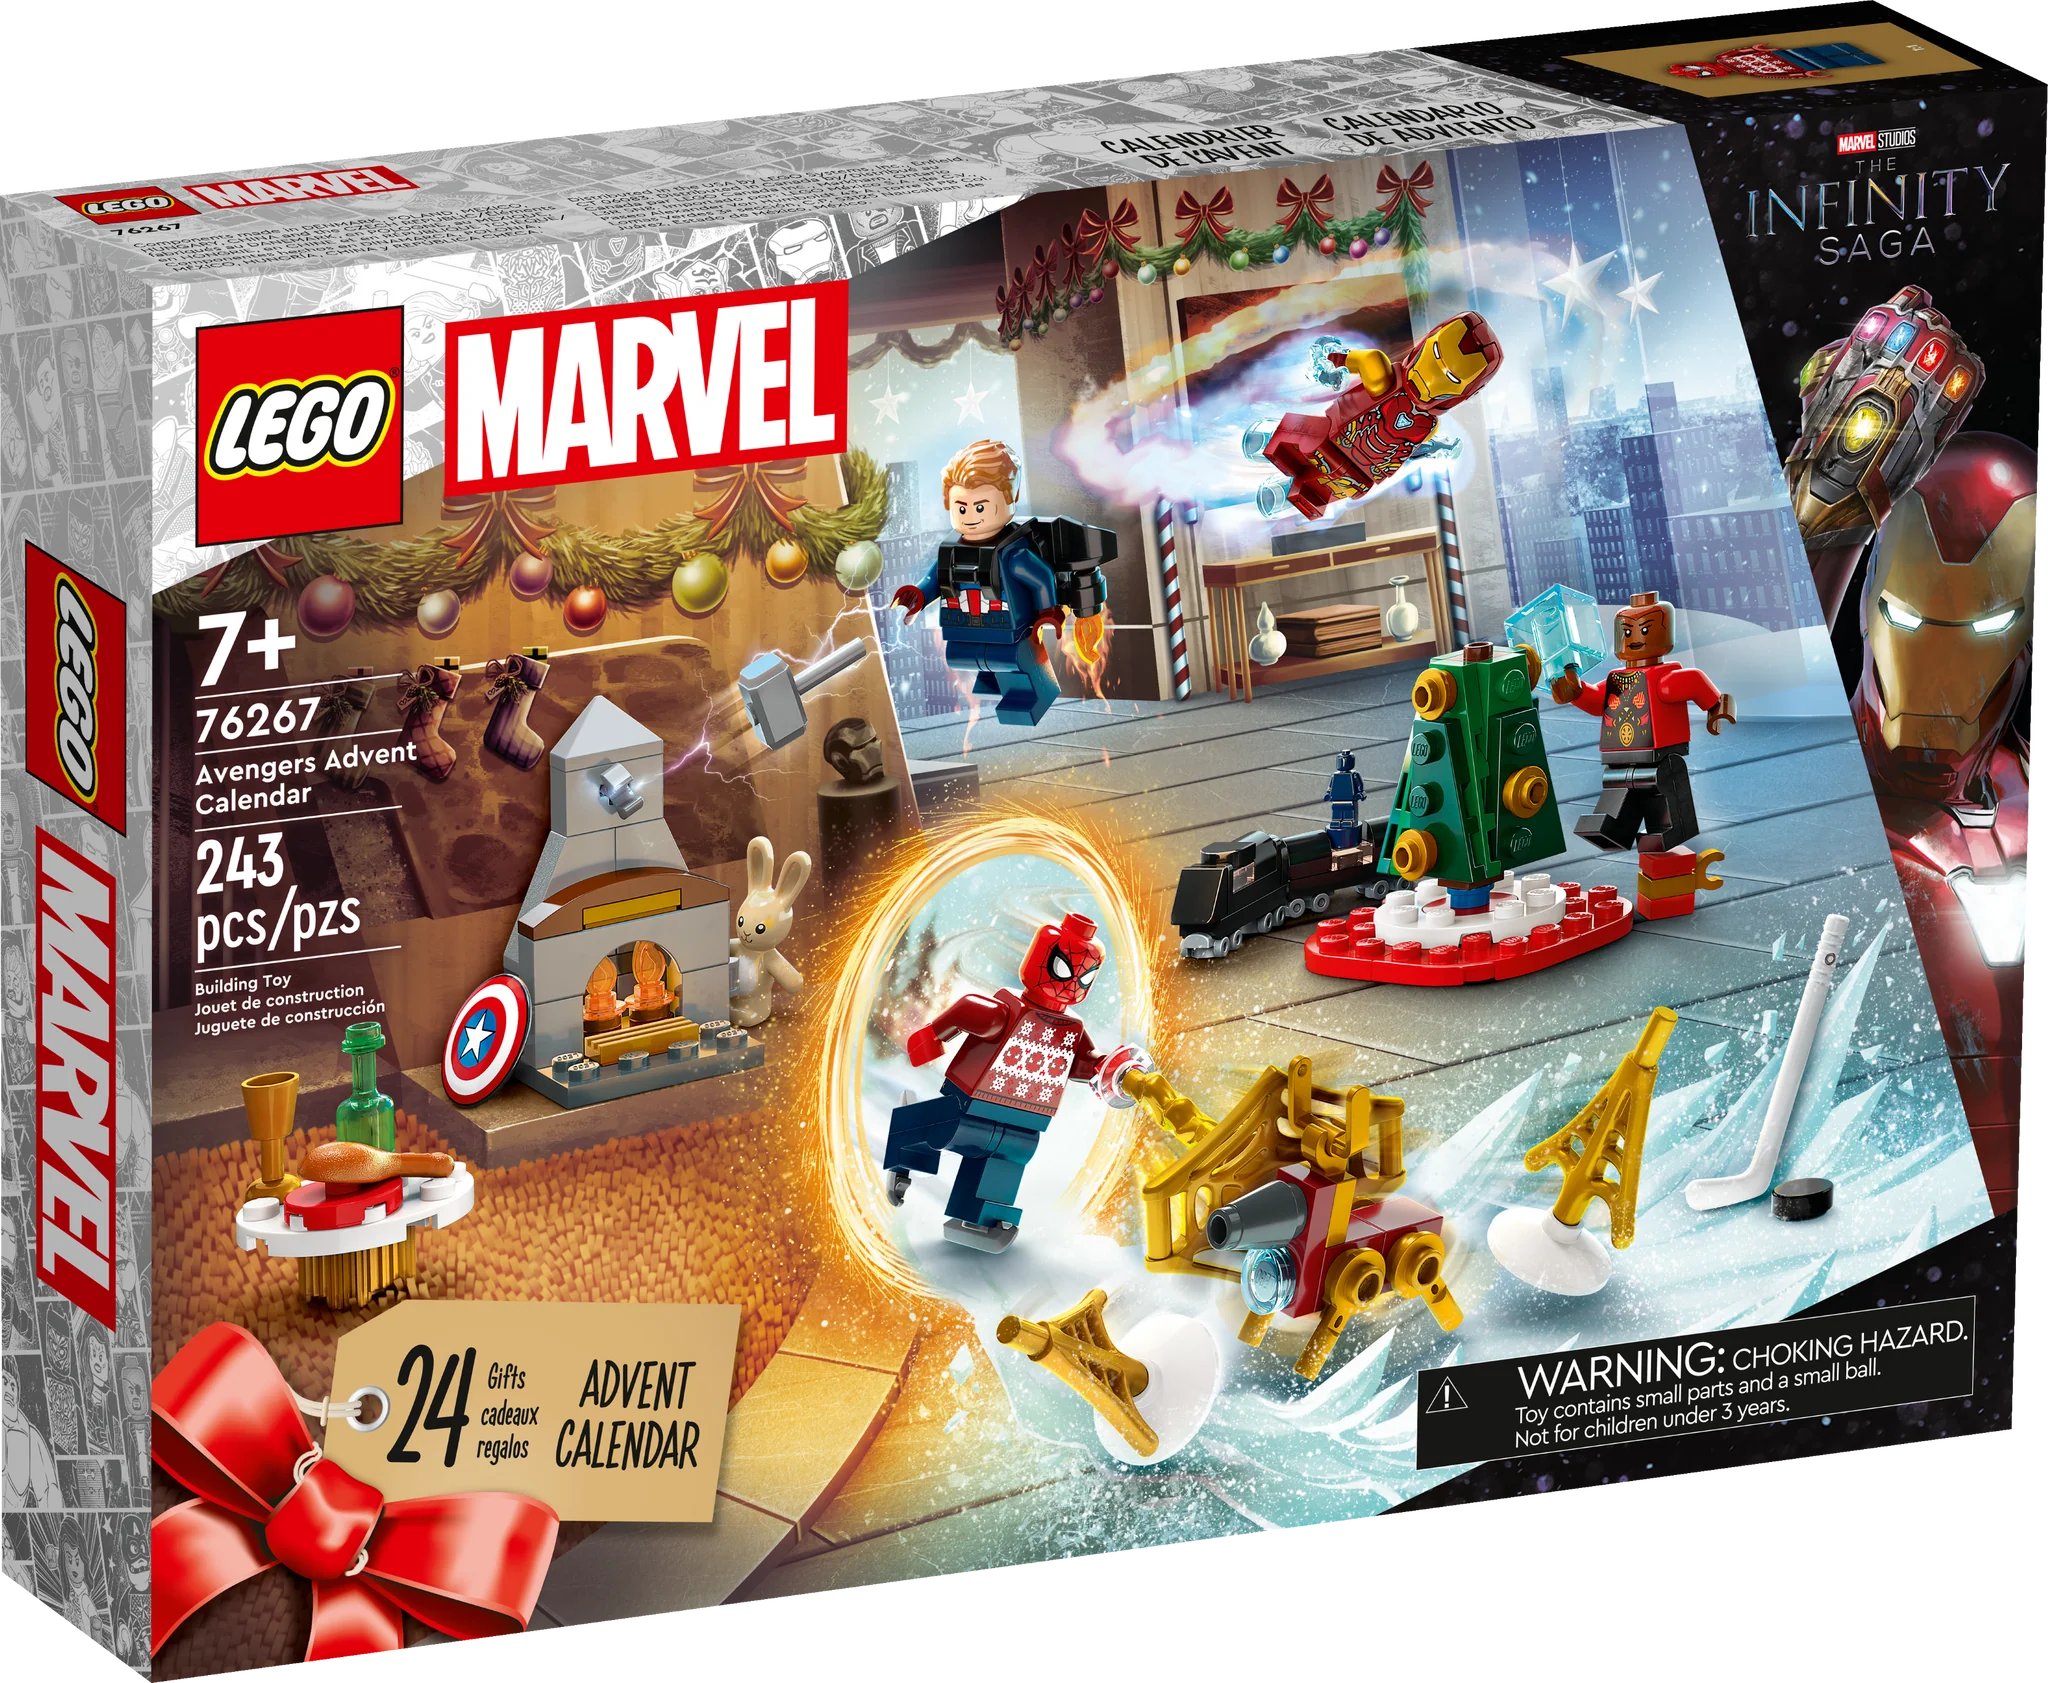 2023 LEGO Marvel The Avengers Advent Calendar Set 76267